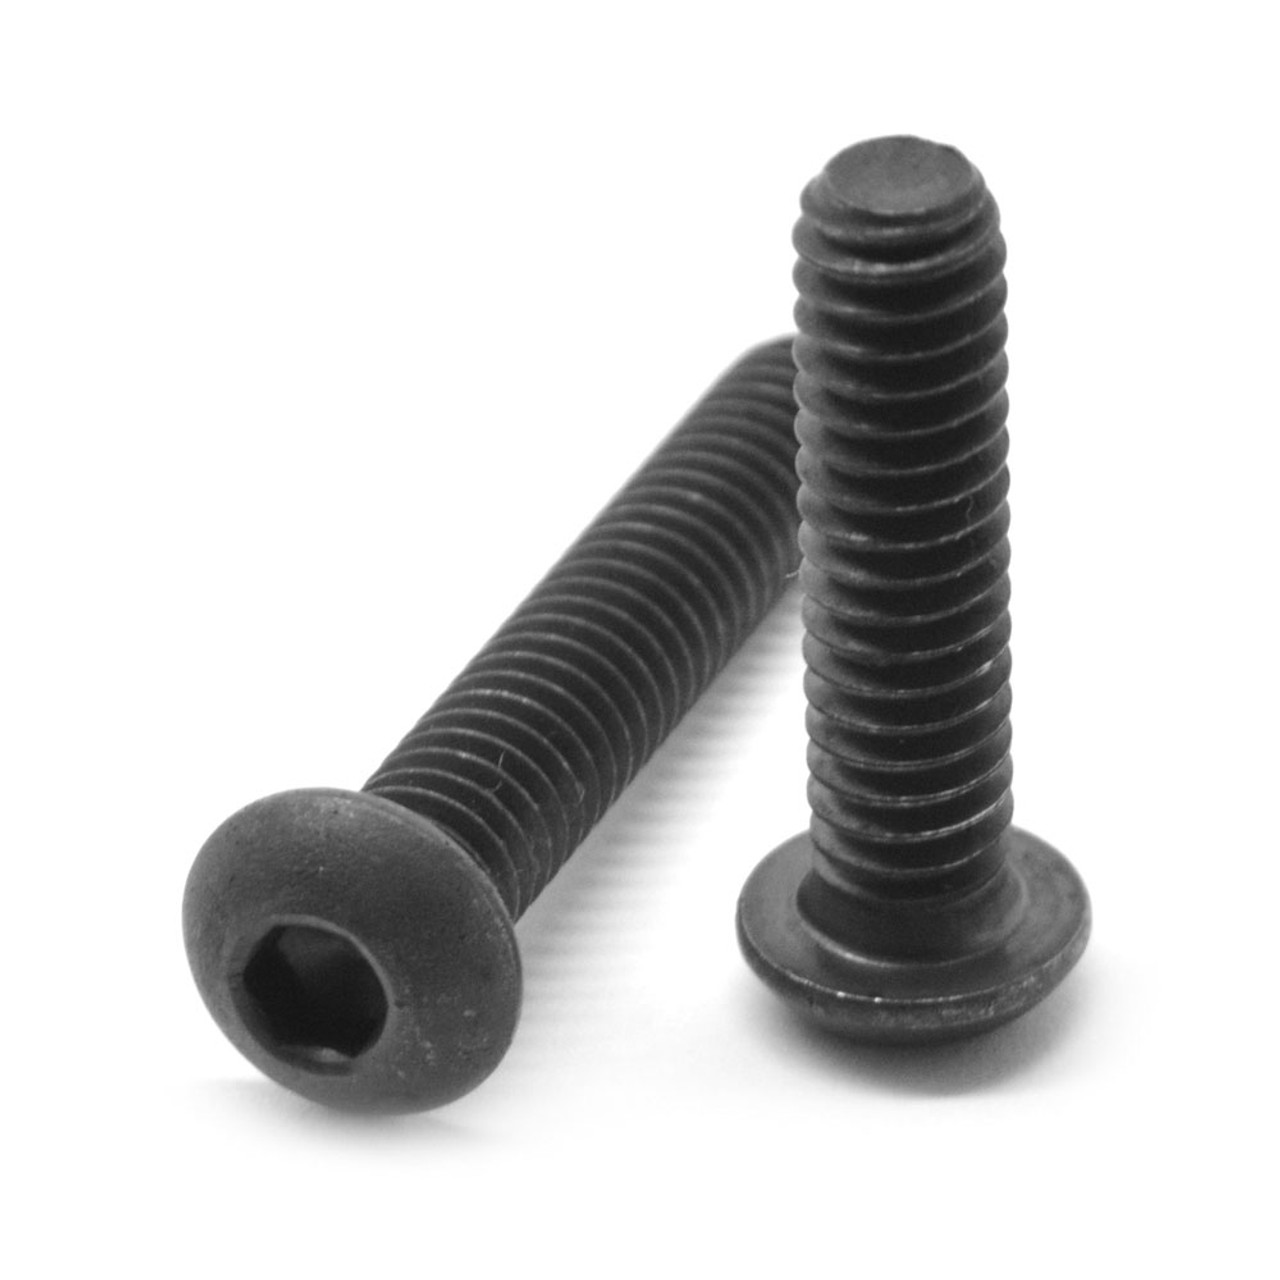 M12 x 1.75 x 20 MM (FT) Coarse Thread ISO 7380 Class 10.9 Socket Button Head Cap Screw Alloy Steel Black Oxide